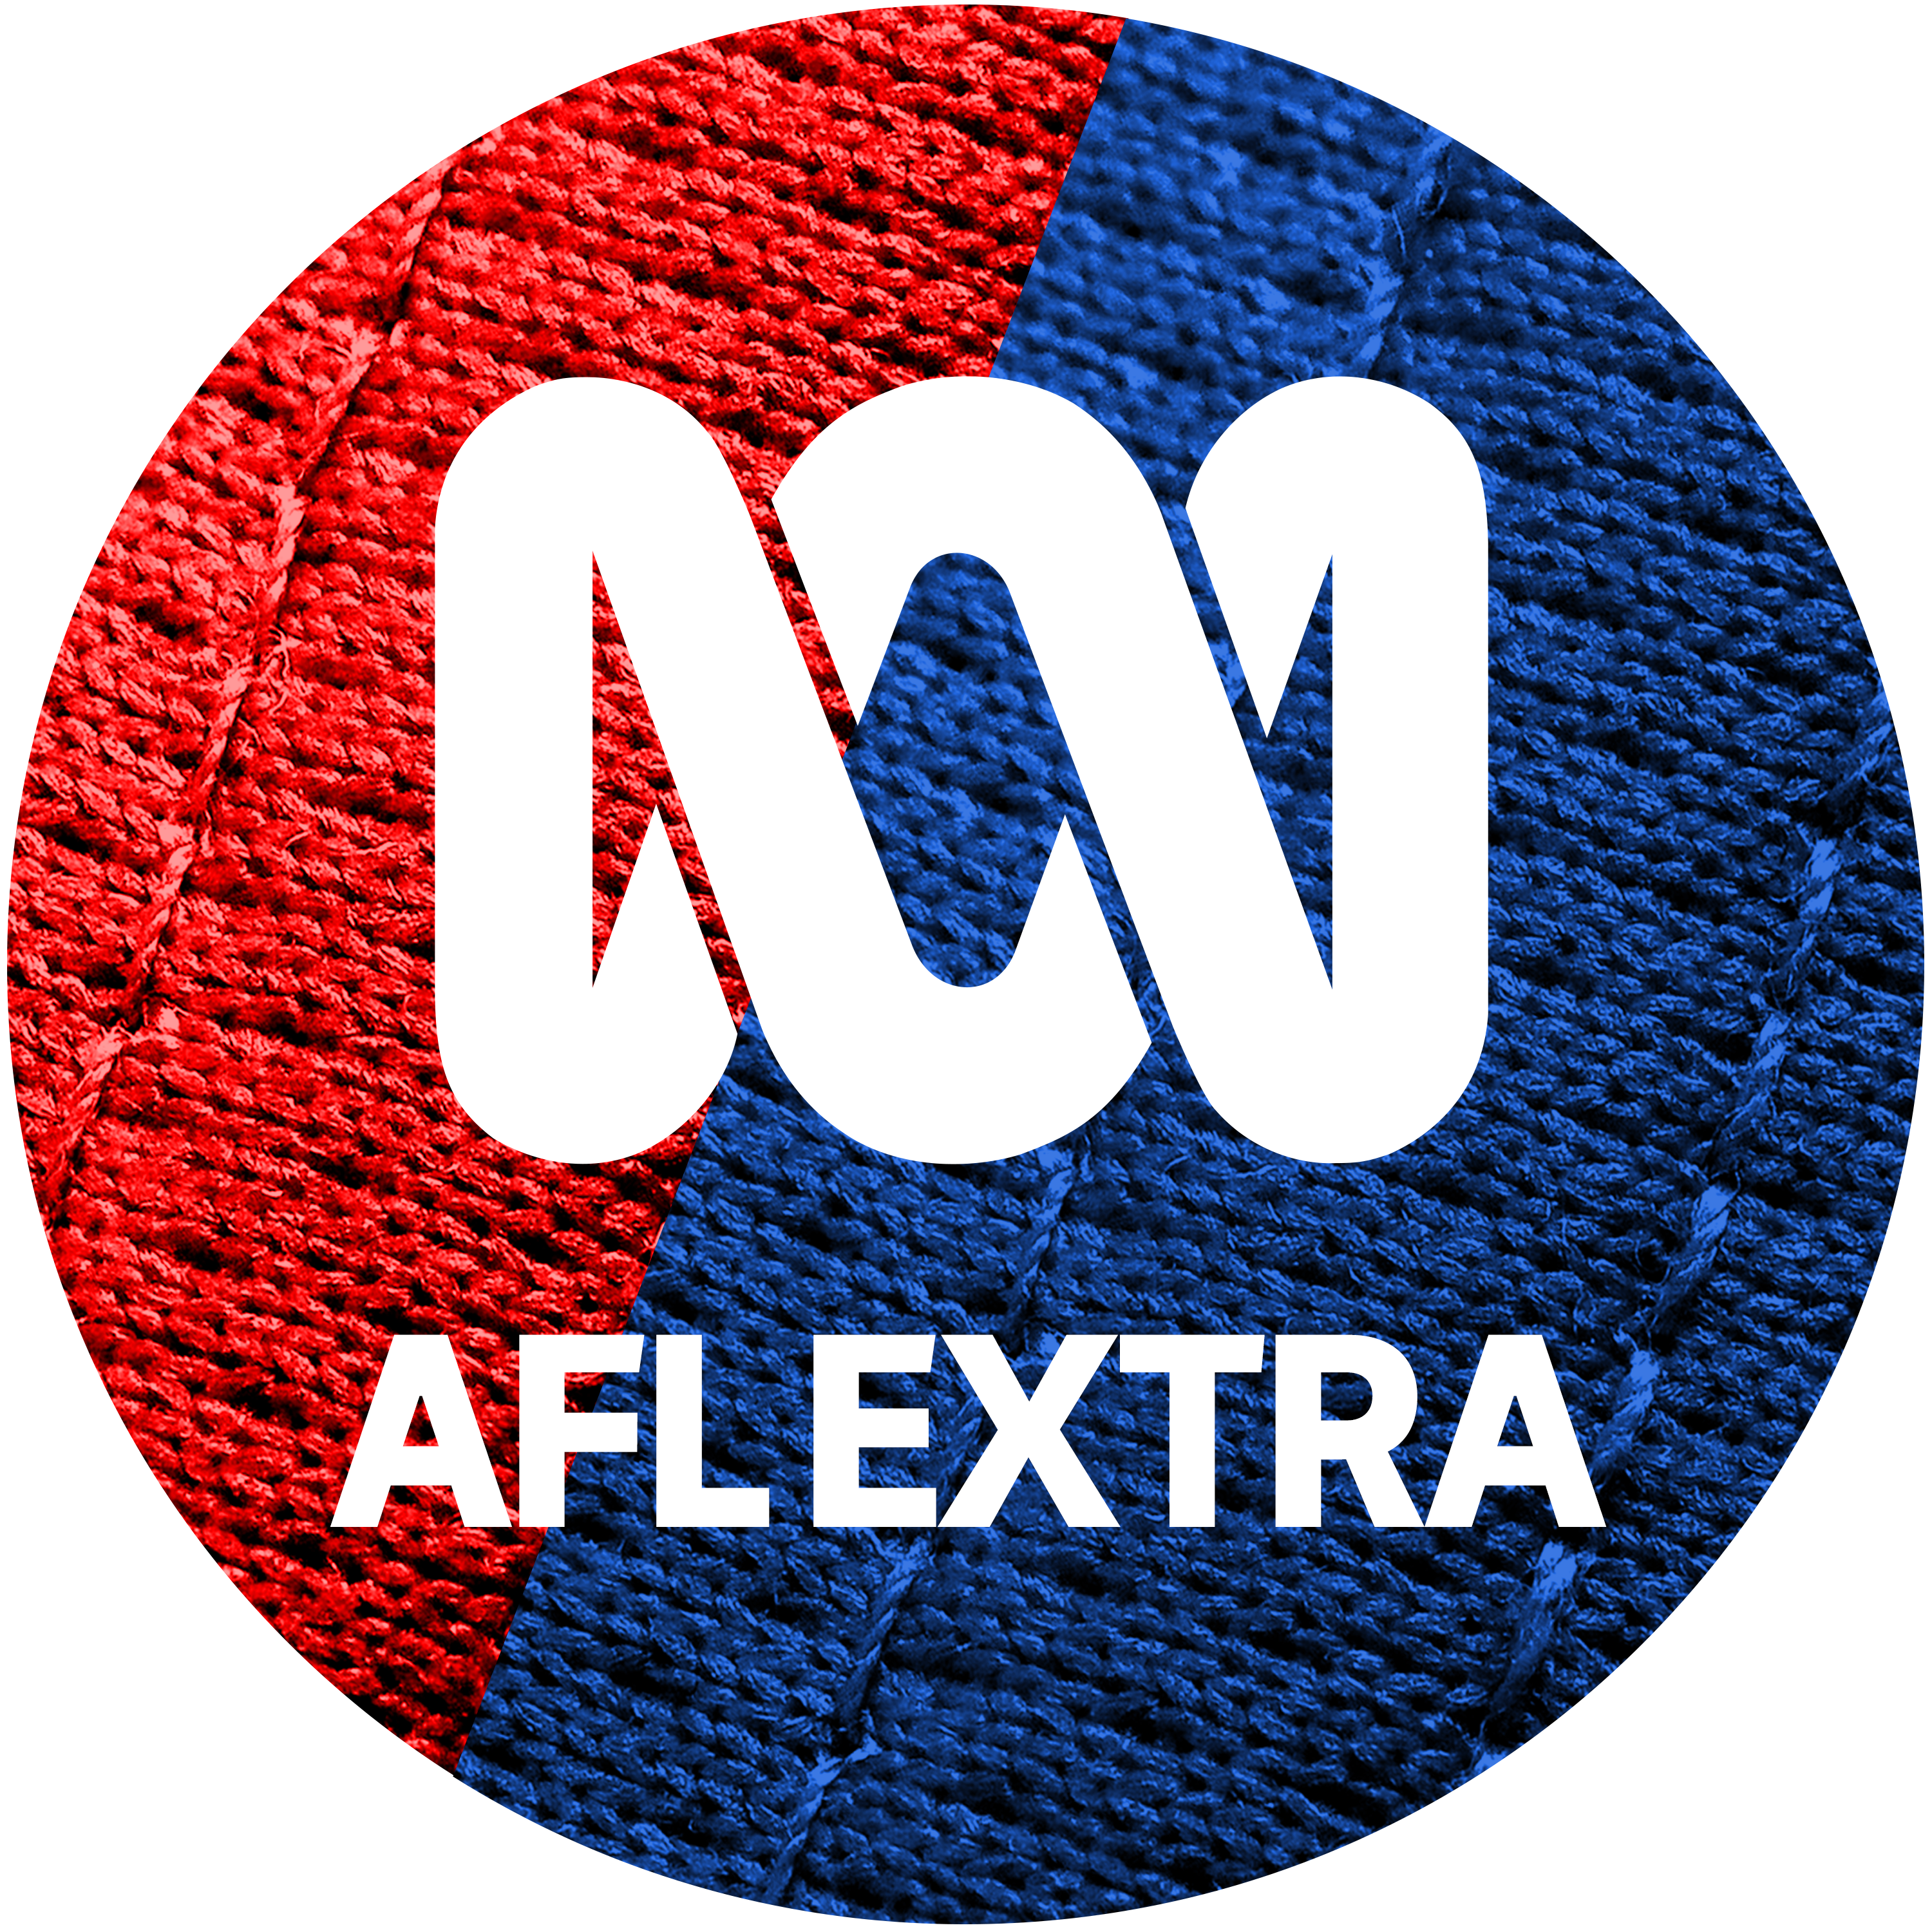 ABC AFL Extra